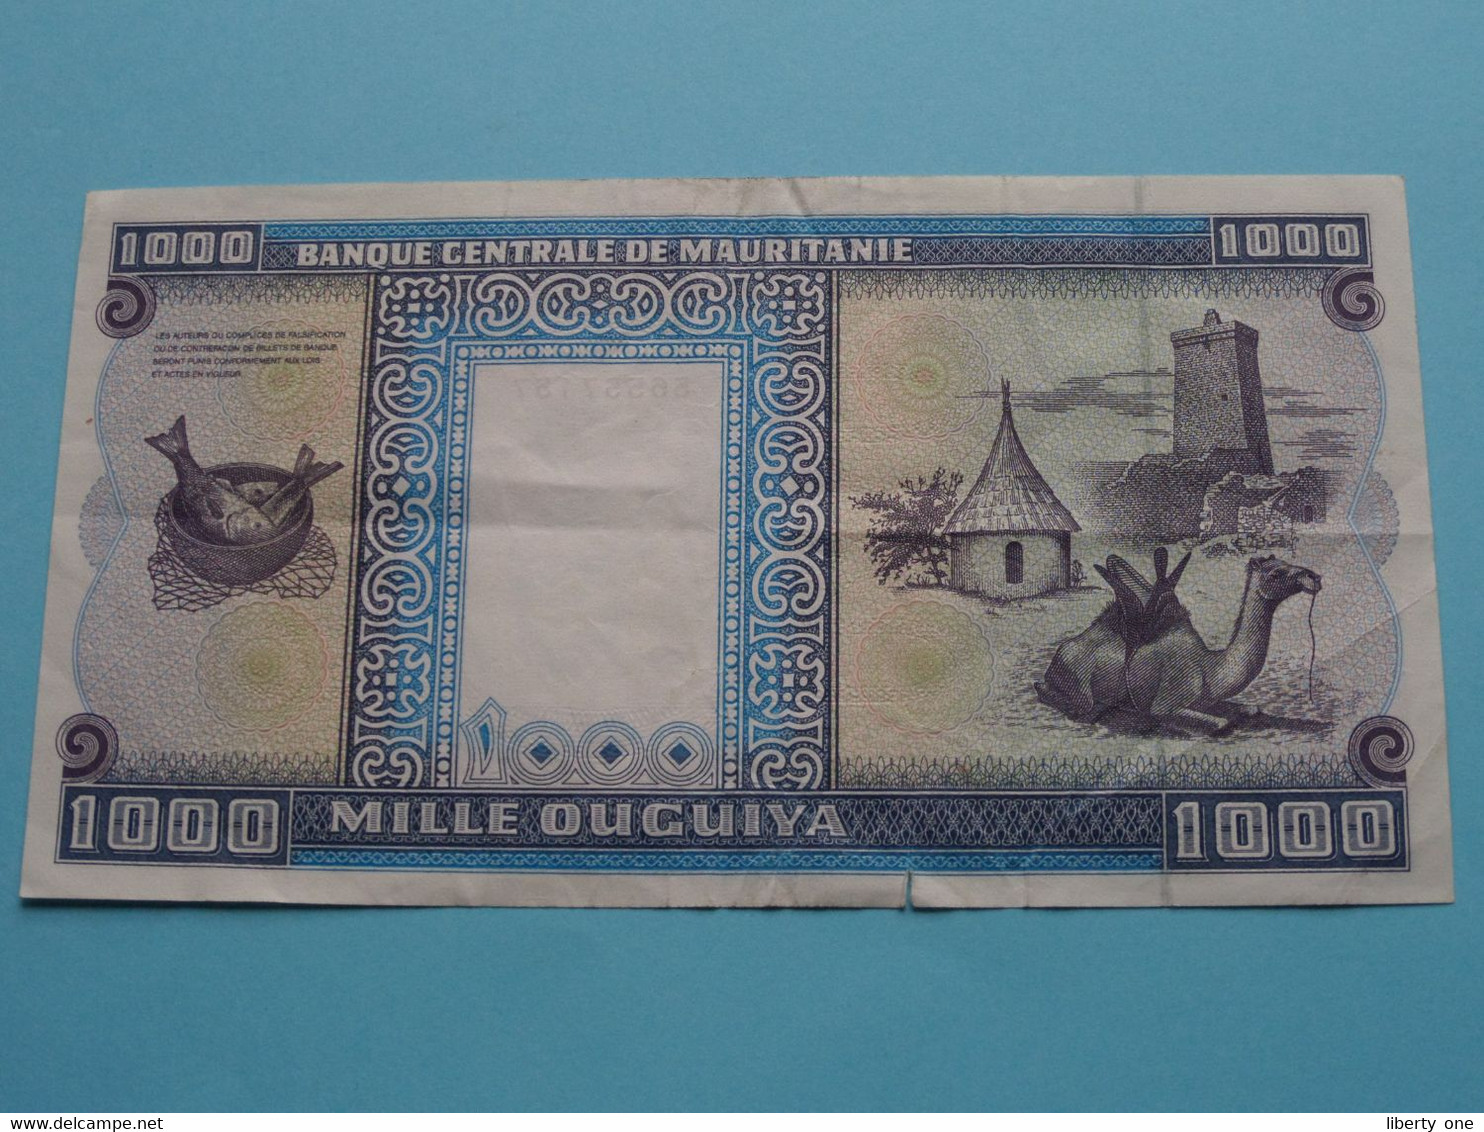 1000 Mille OUGUIYA - 28/11/1993 ( For Grade, Please See SCANS ) Circulated ( Small Tear ) ! - Mauritanie